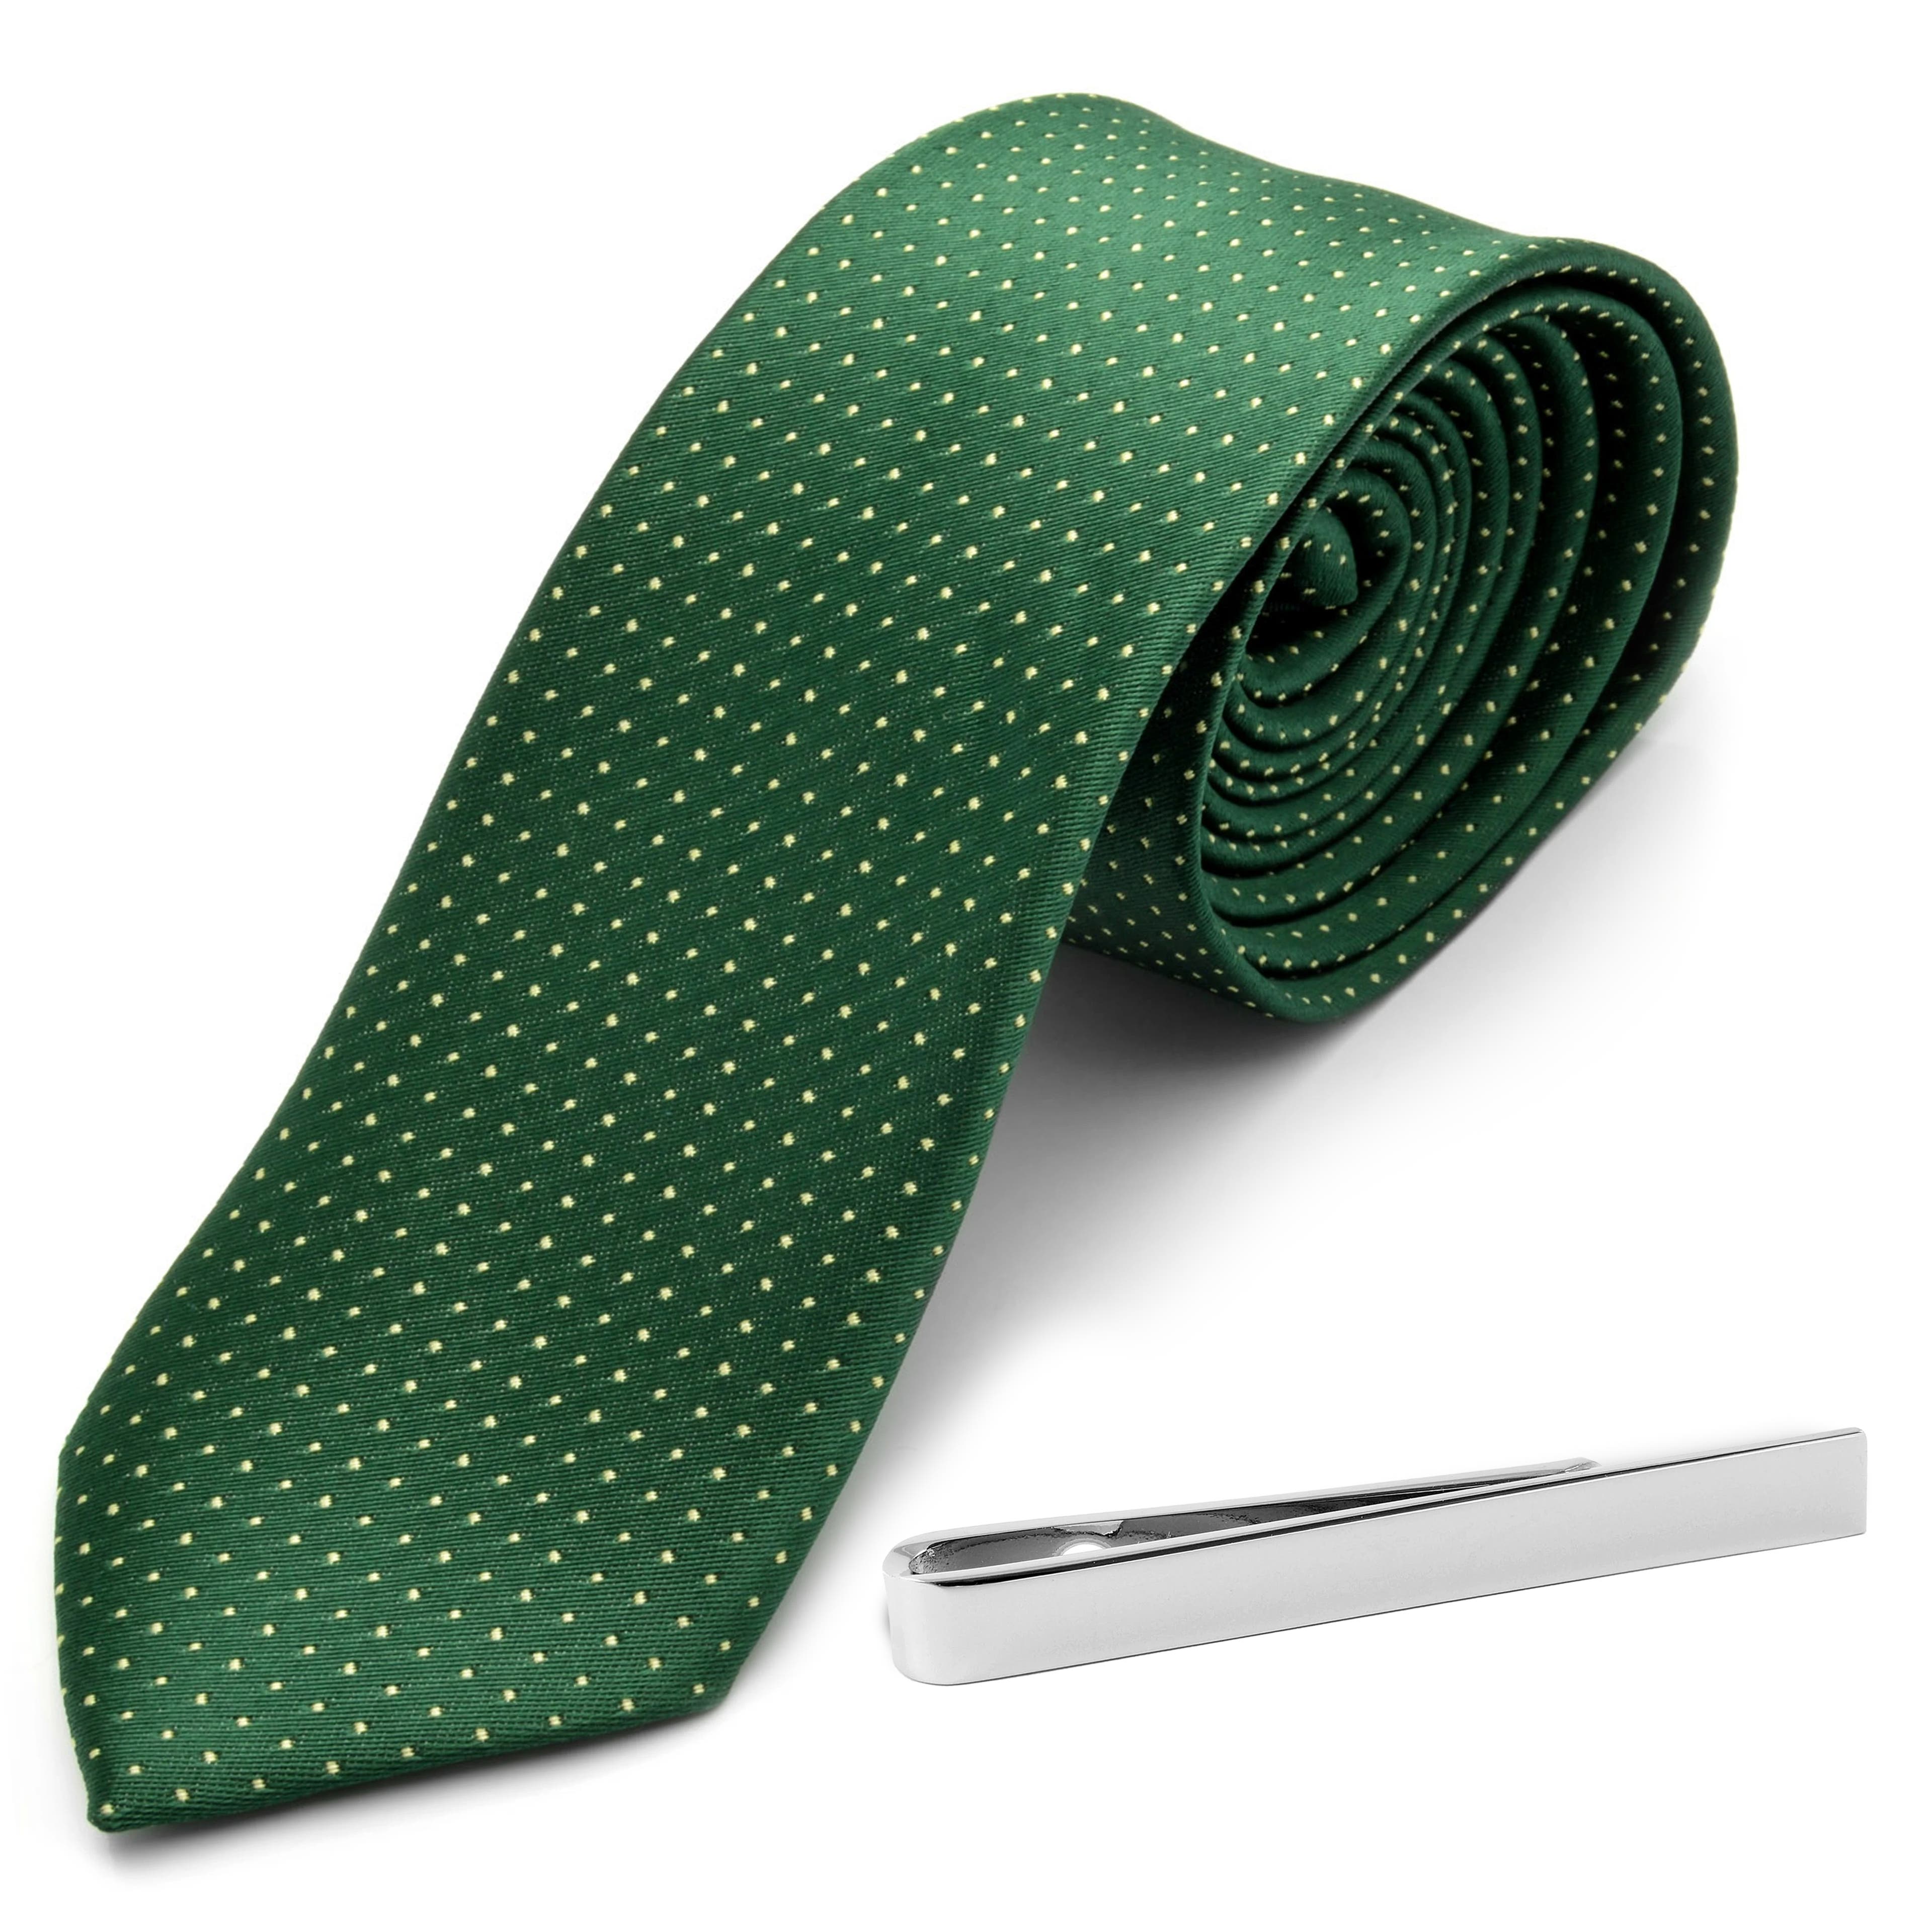 Sada zelené puntíkované kravaty a kravatové spony stříbrné barvy